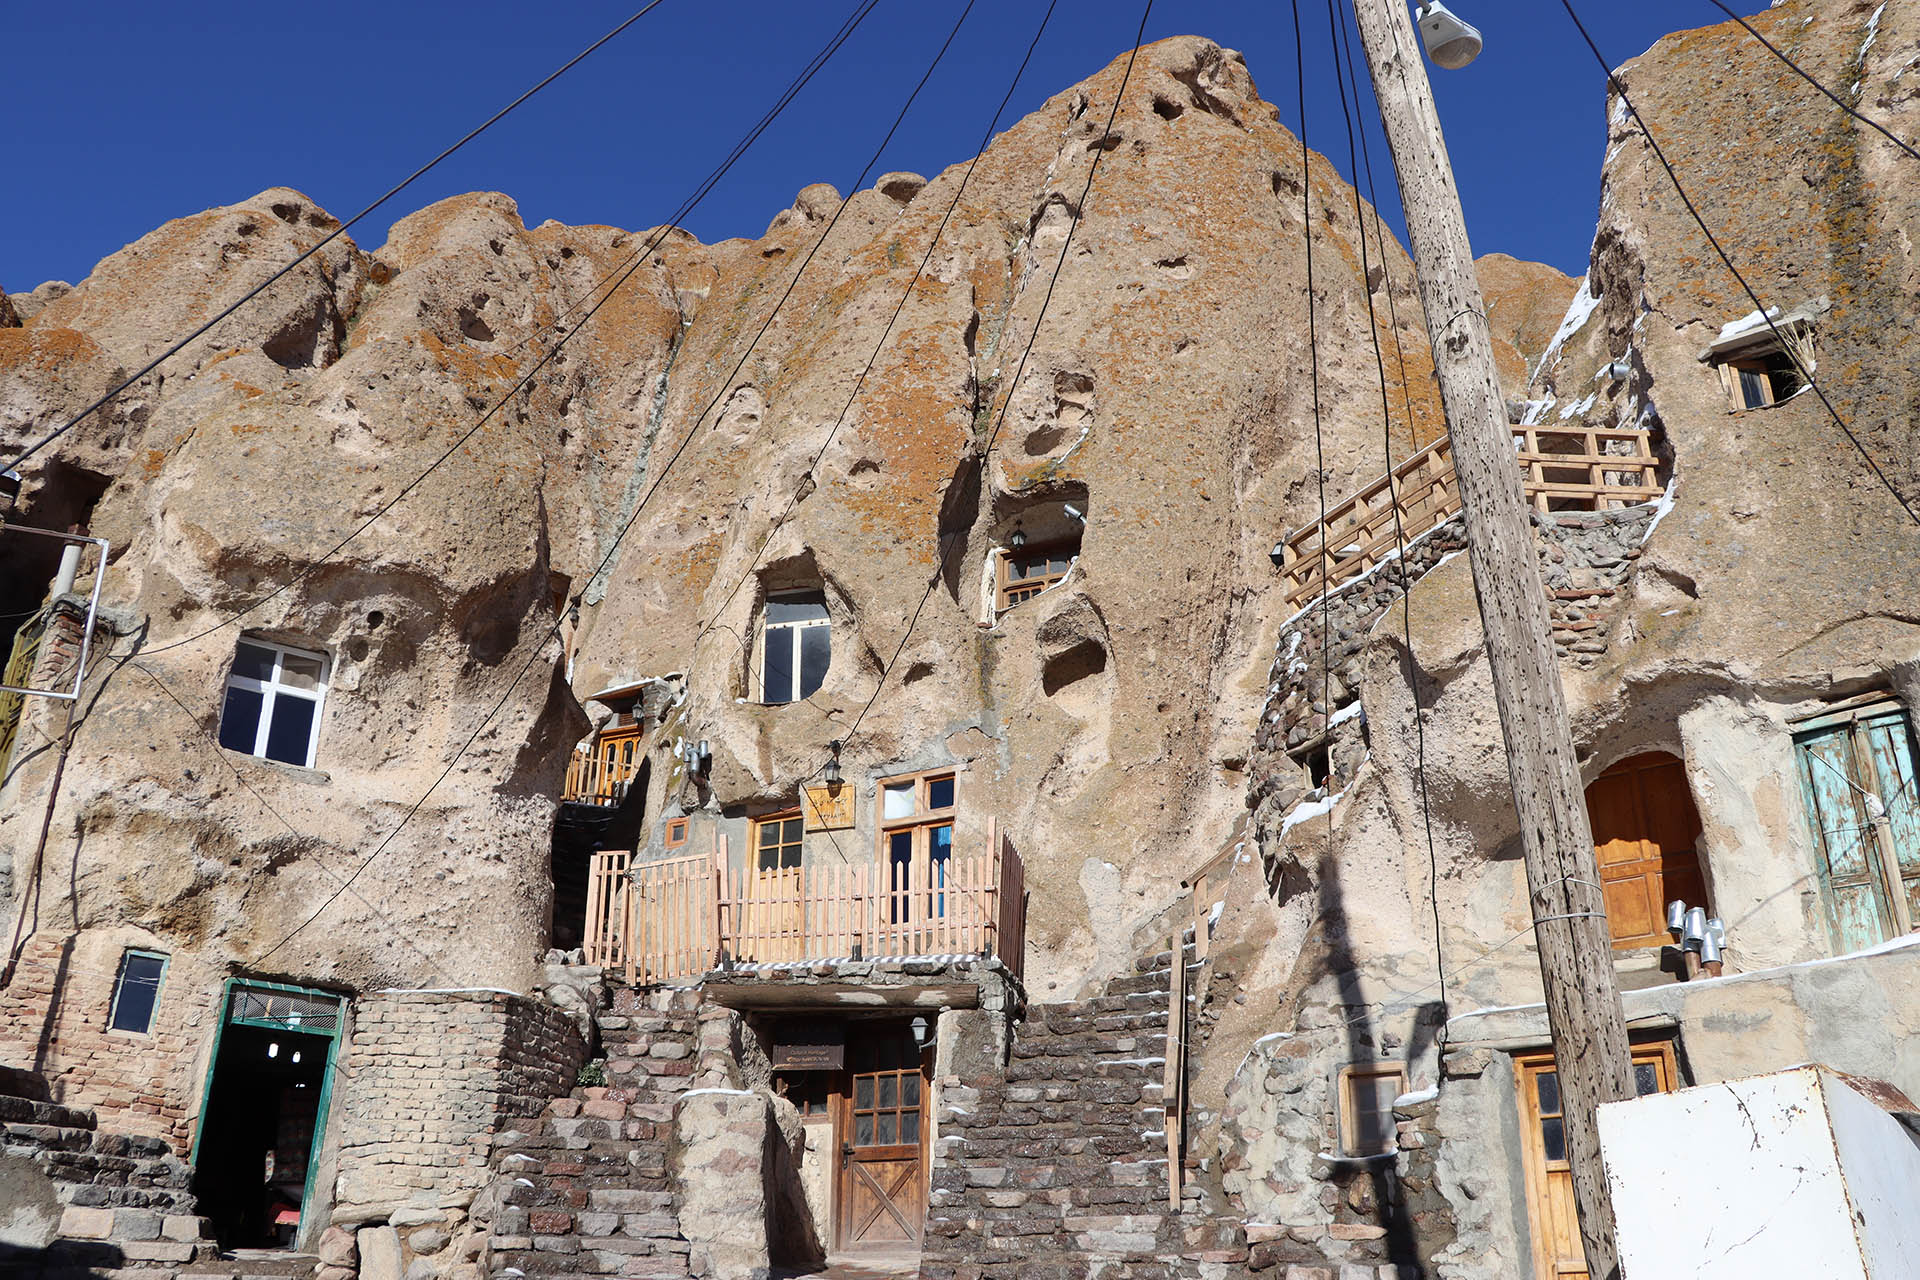 Kandovan: A Rocky Village Life in Iran